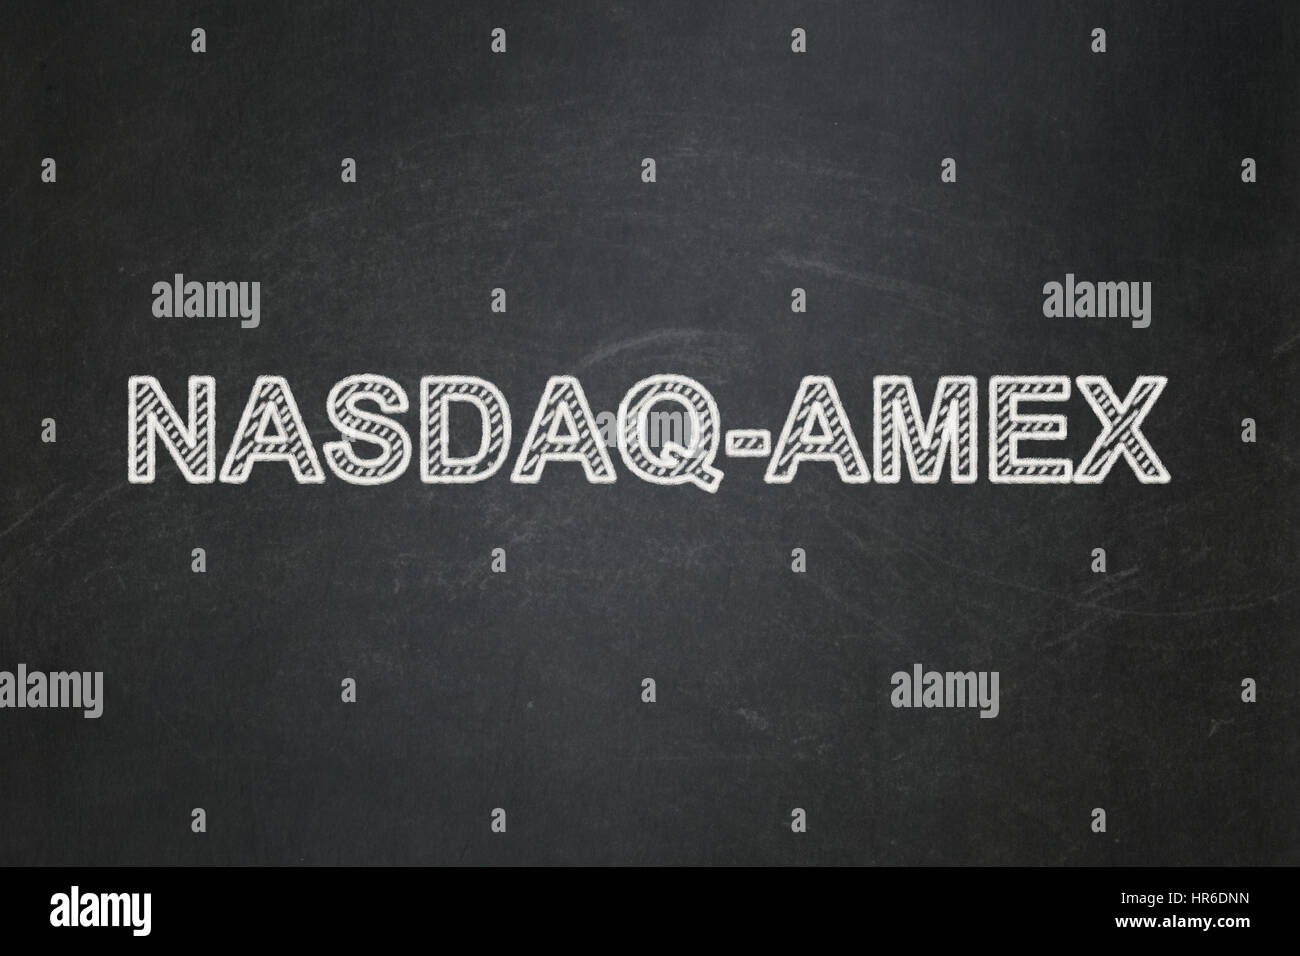 Stock market indexes concept: NASDAQ-AMEX on chalkboard background Stock Photo